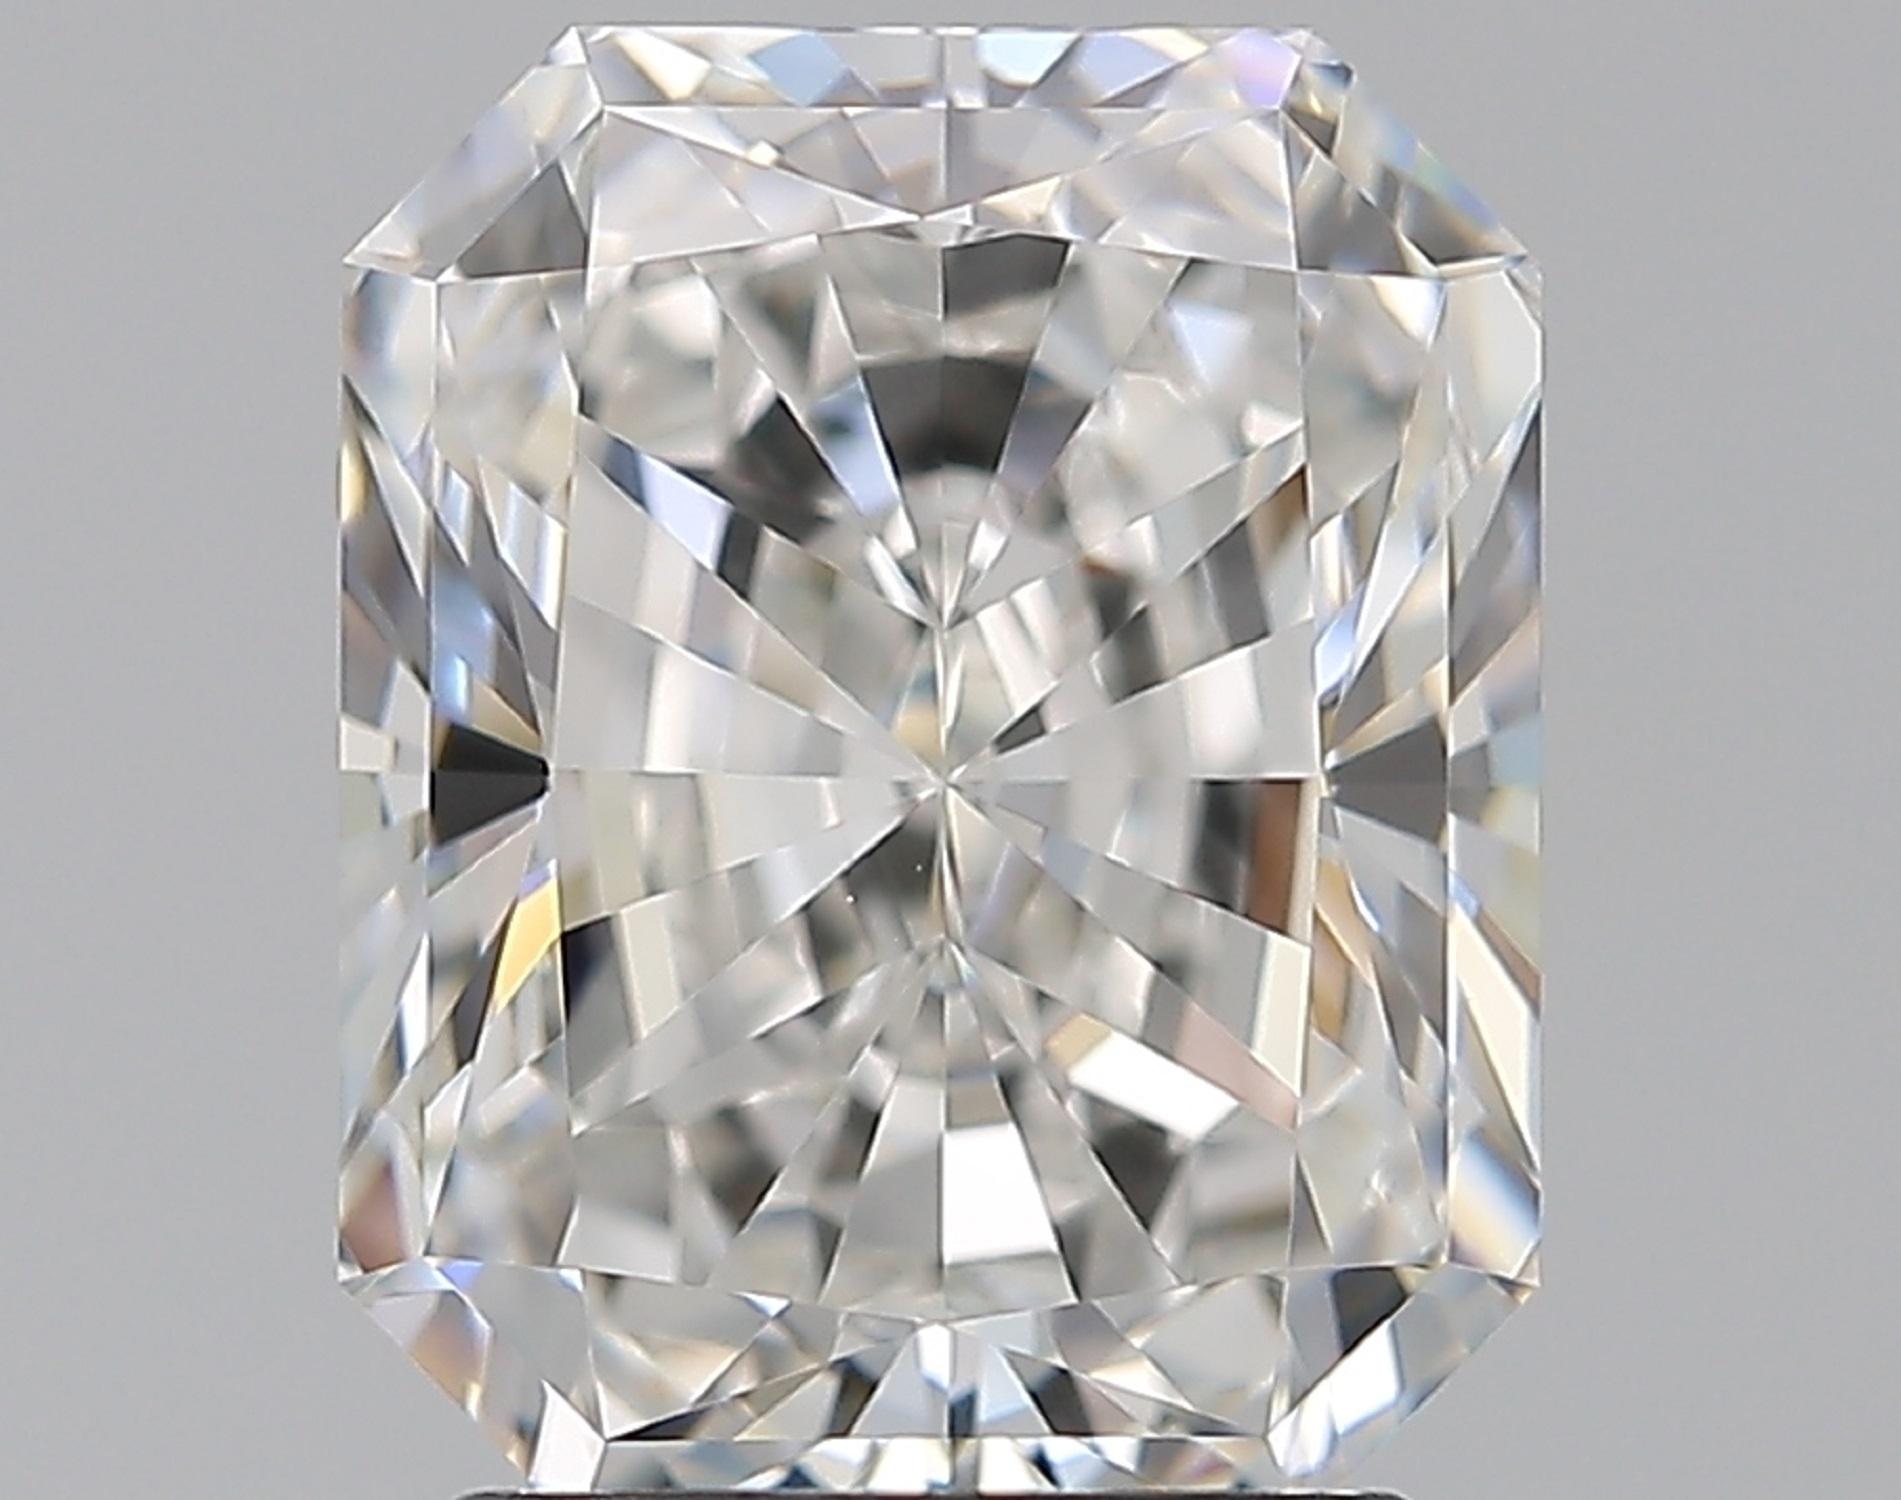 3 carat radiant cut diamond ring on hand